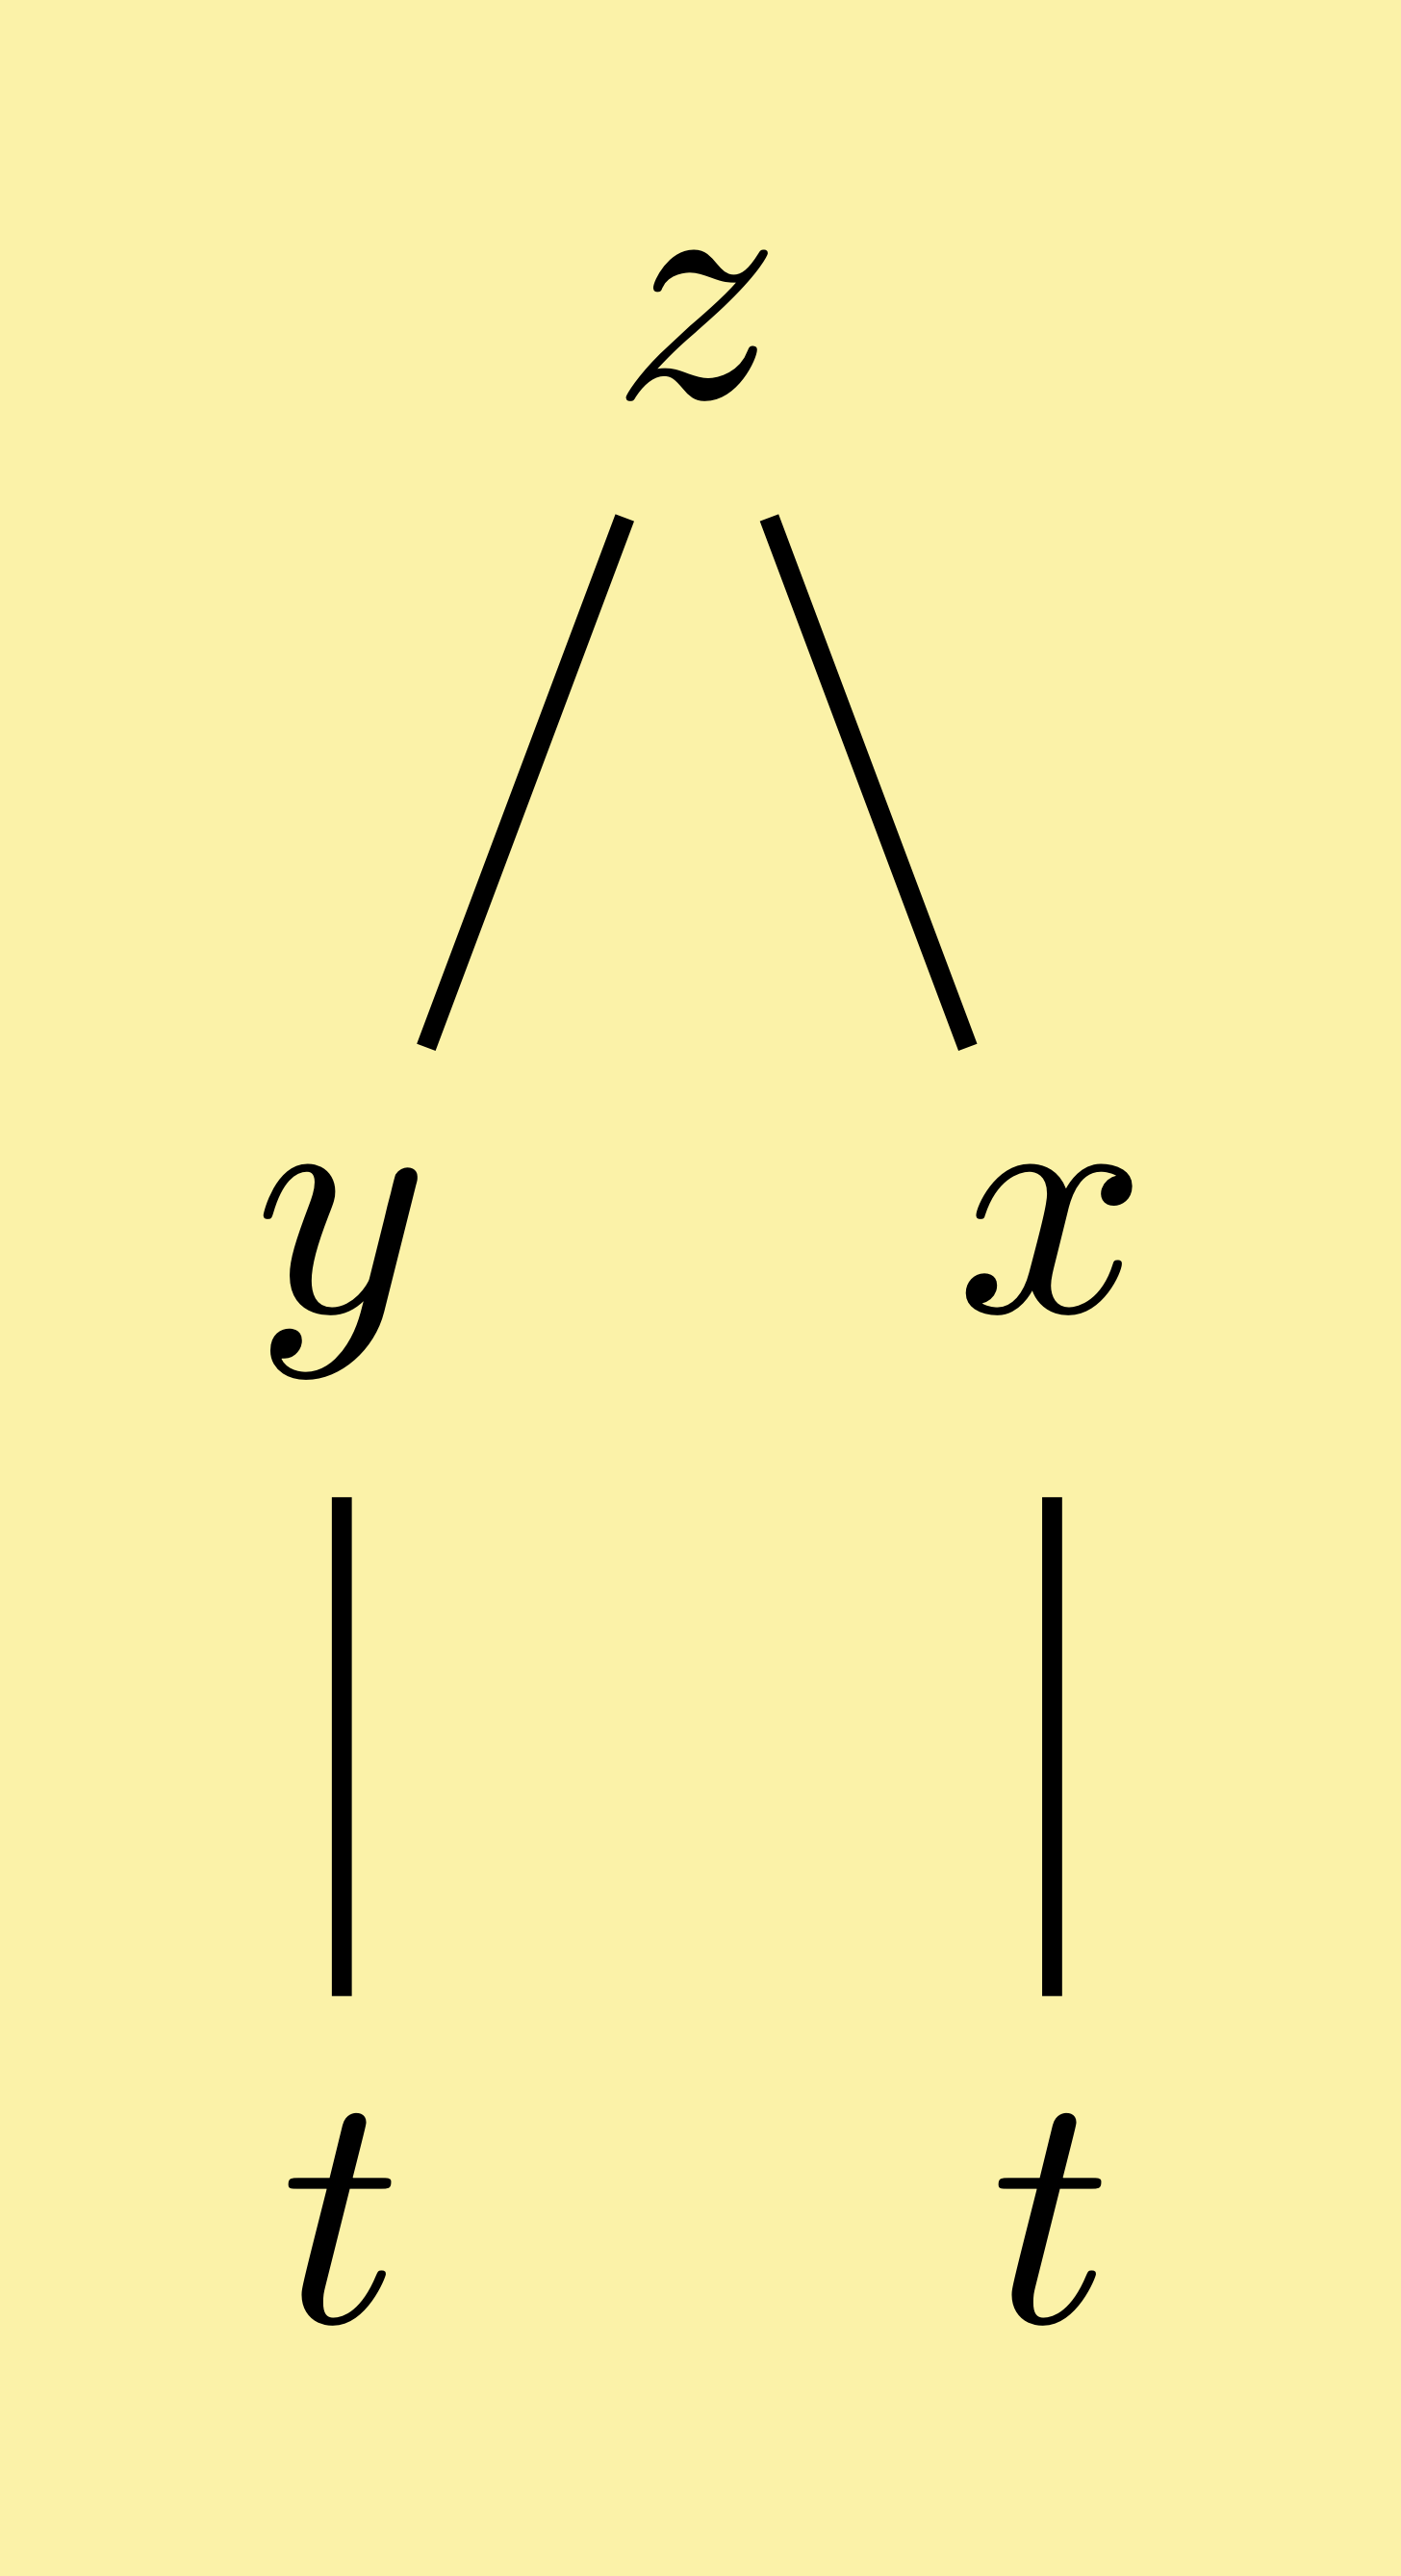 multivariable vector calculus chain rule